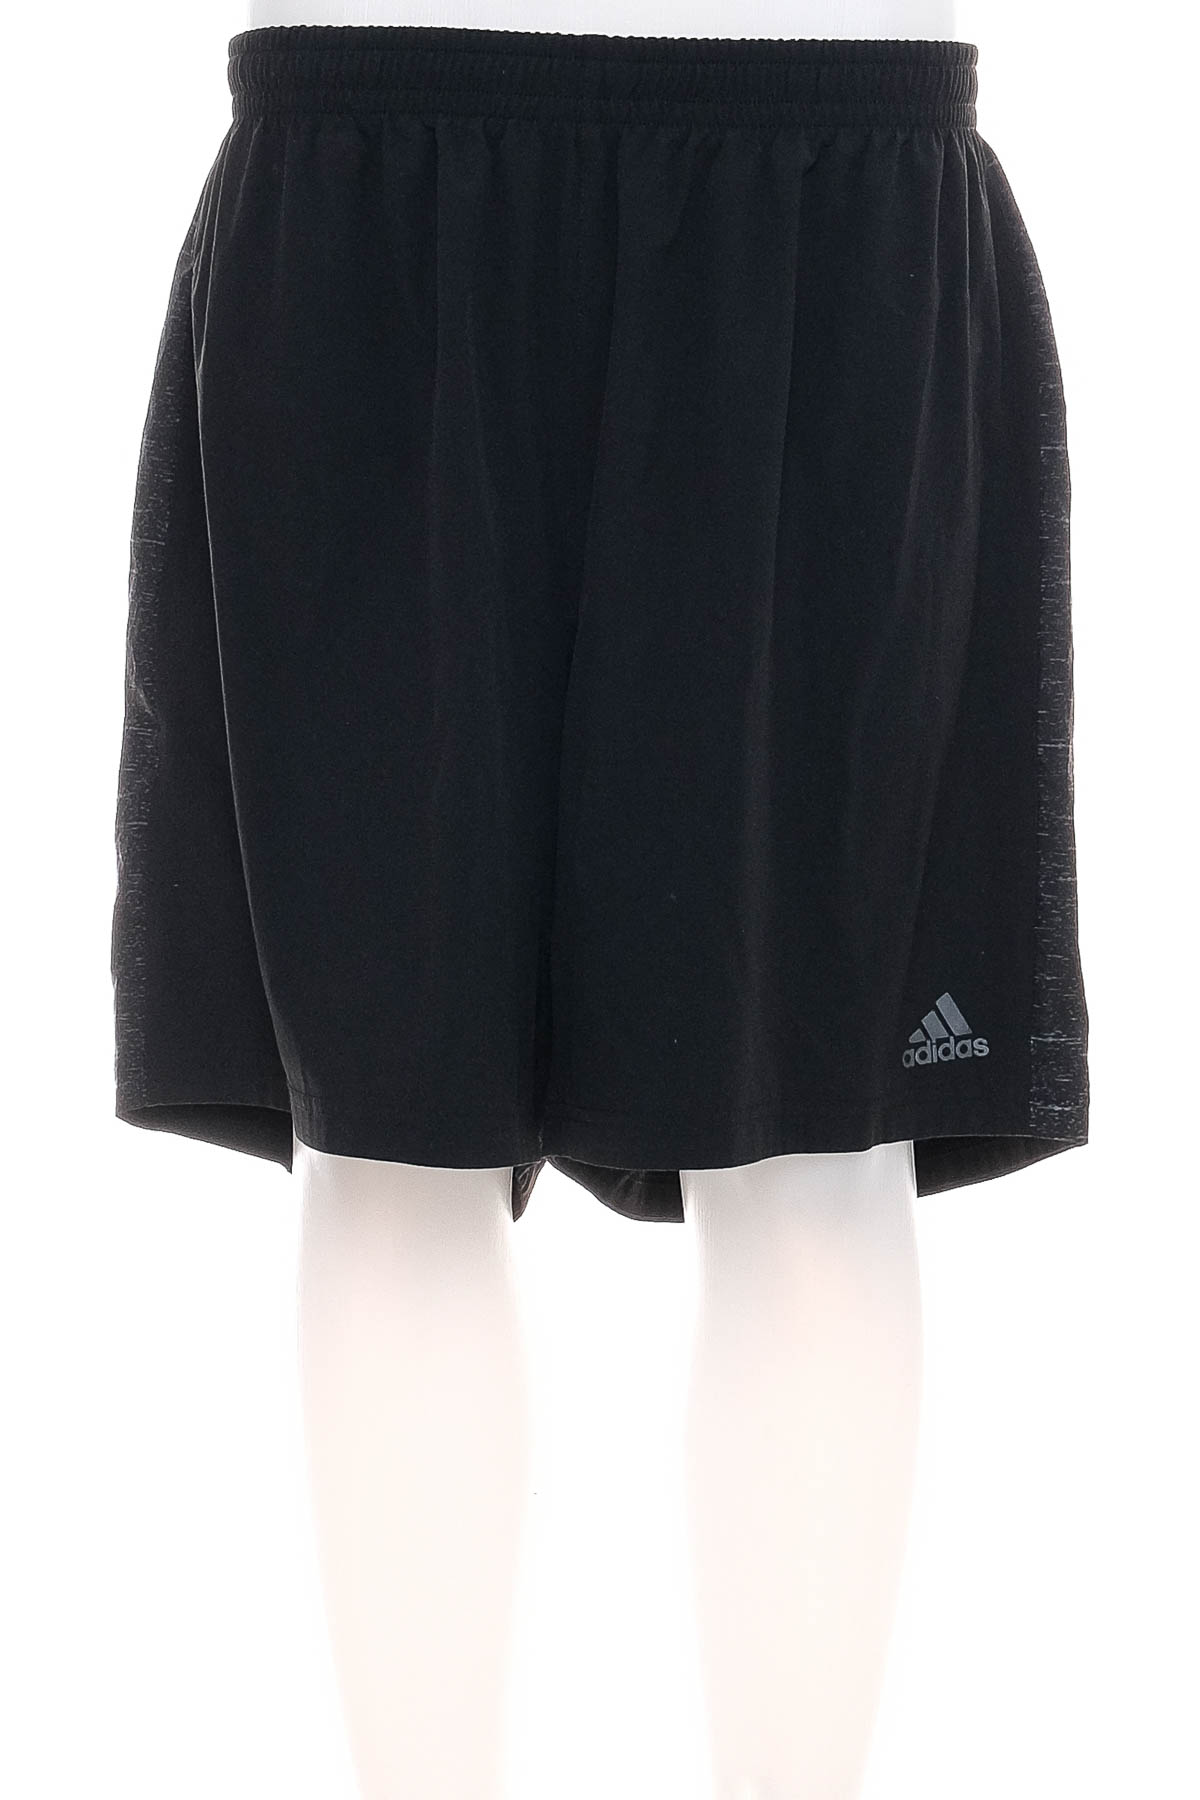 Men's shorts - Adidas - 0